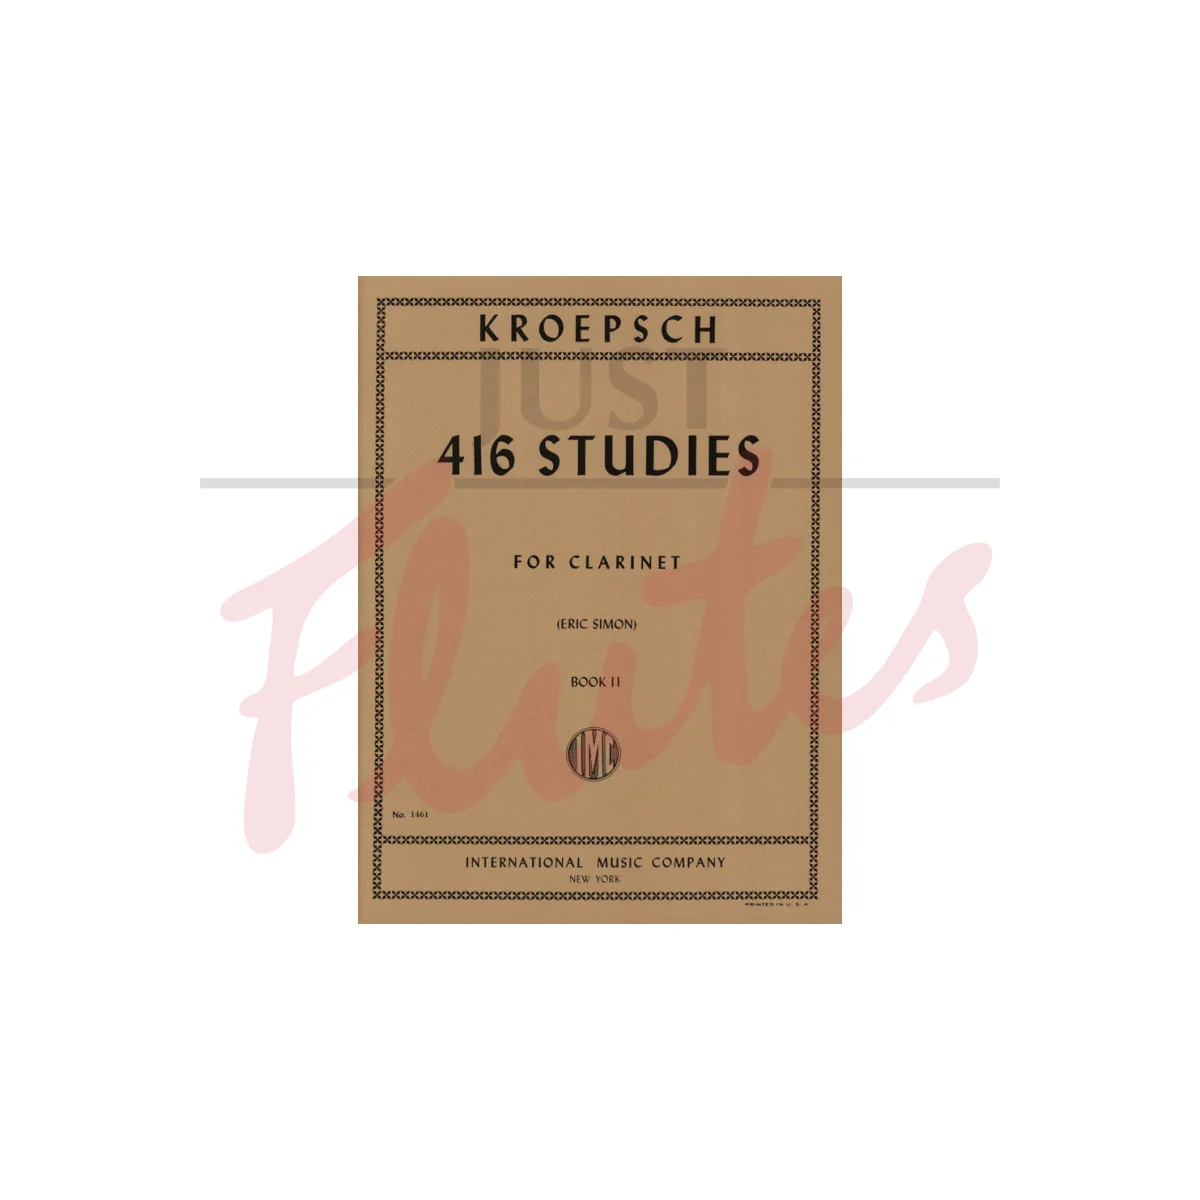 416 Studies for Clarinet, Vol. 2